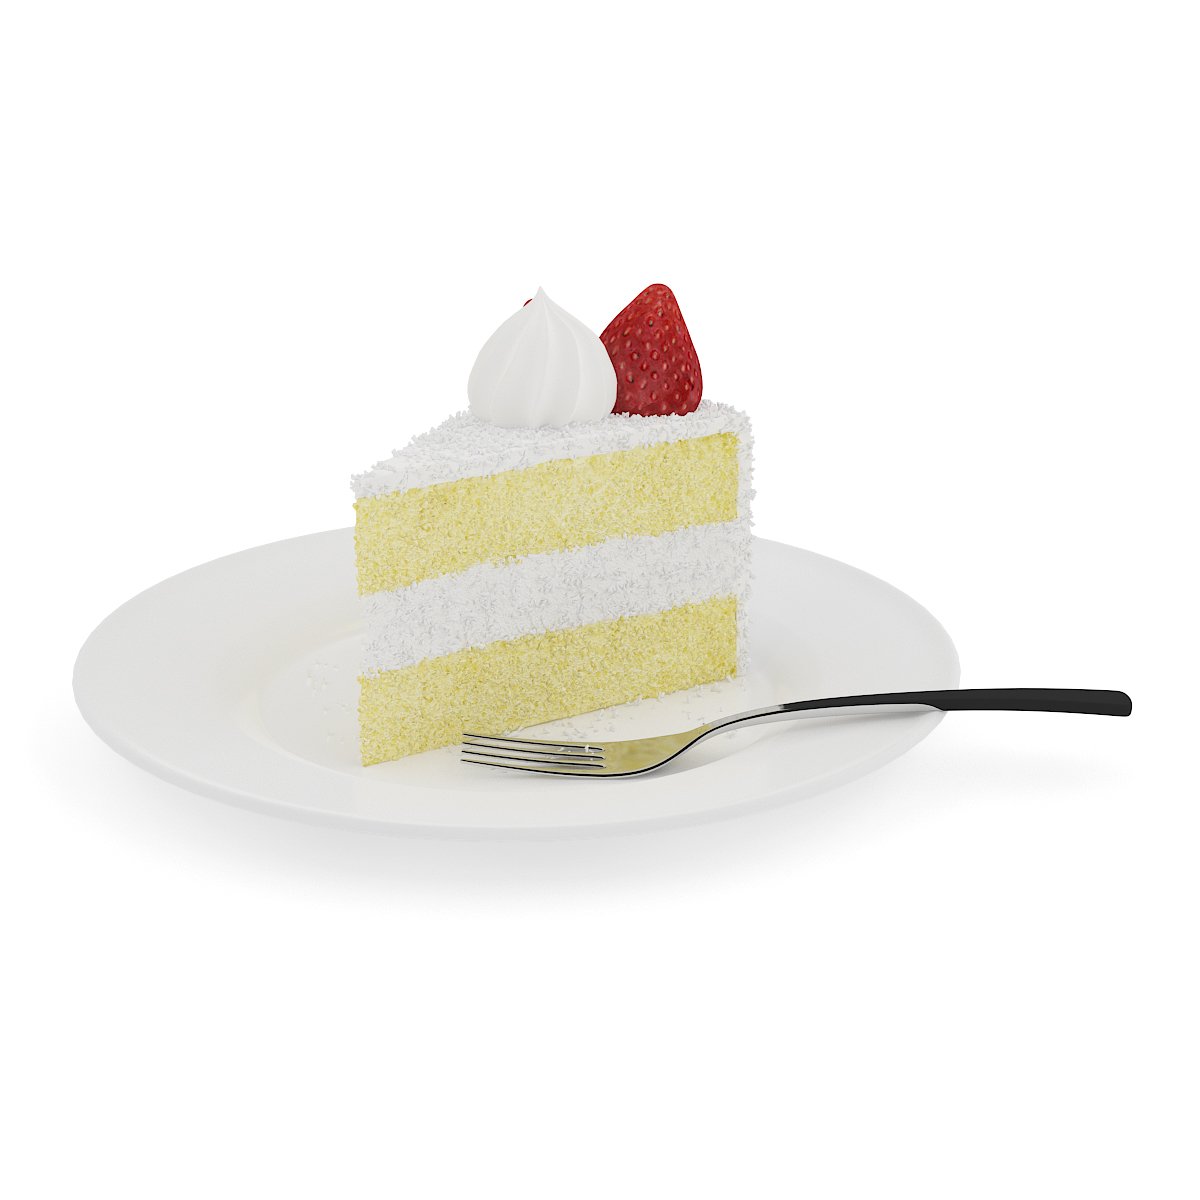 Phoenix Sweets - Order Standard Butter Cream Cake - Sweet Dream